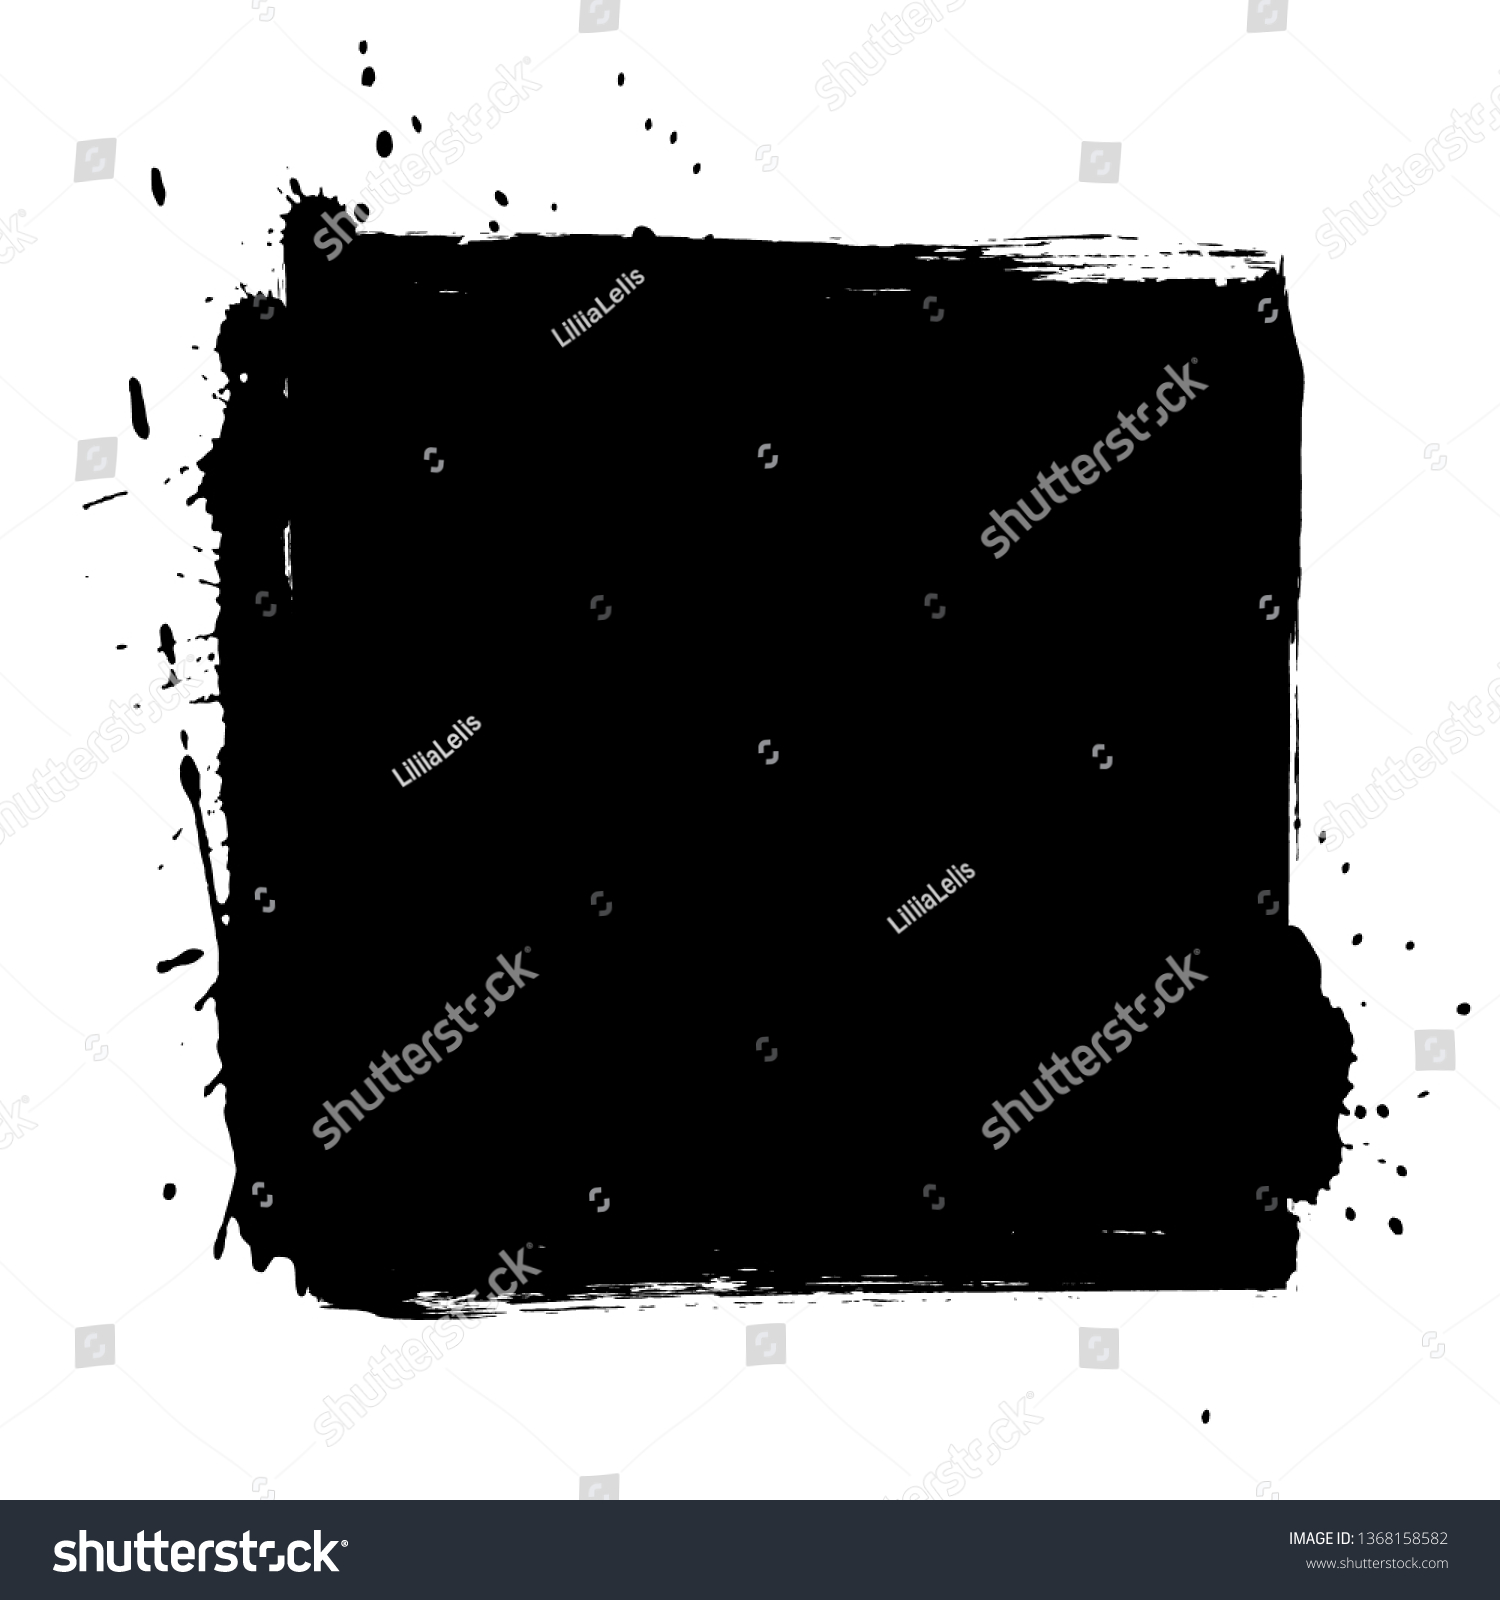 Grunge background. Grunge frame. Grunge border. Grunge black square on white background.  #1368158582